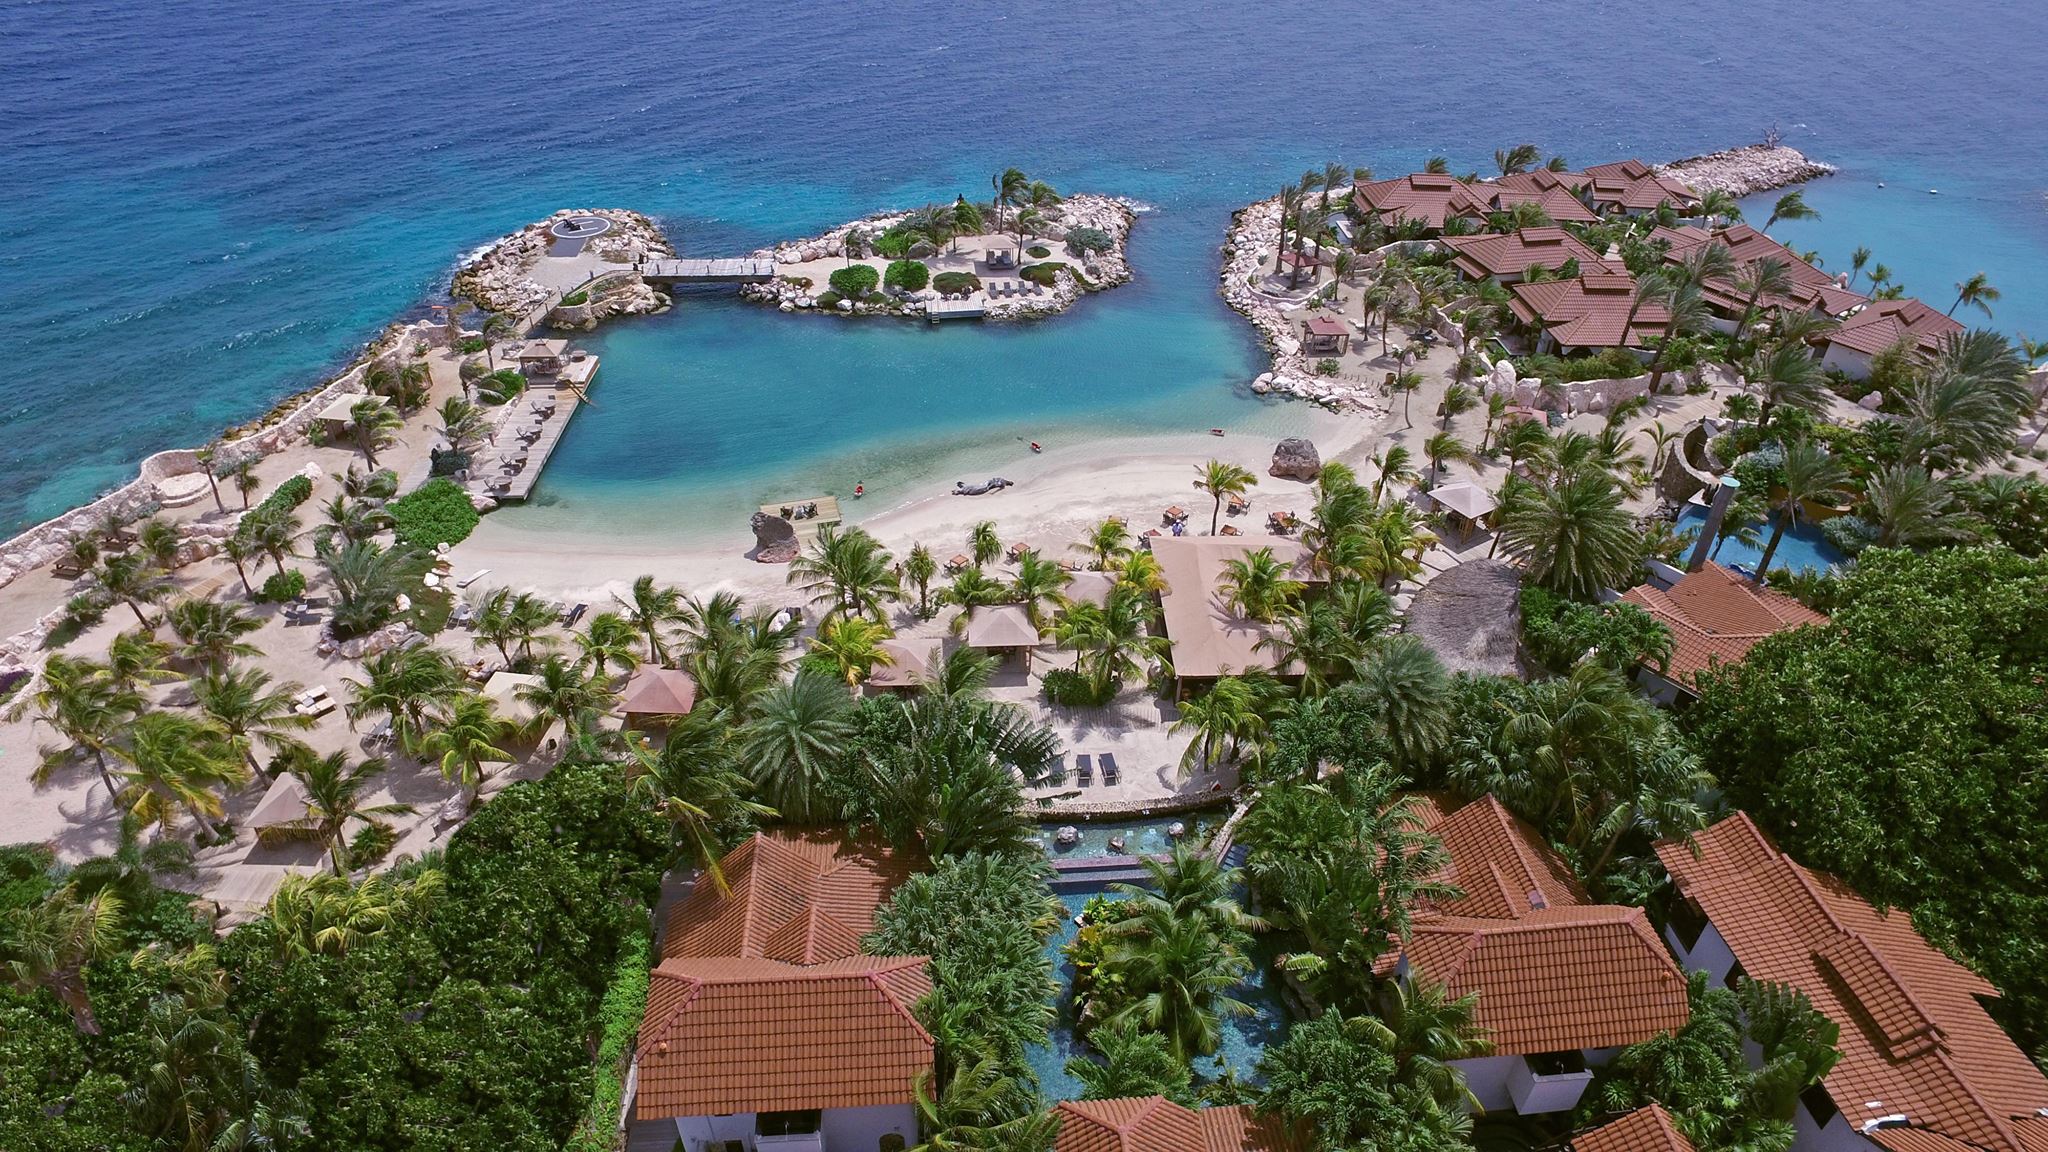 Baoase Luxury Resort in Curaçao – Admitted to Virtuoso Hotels & Resorts Program